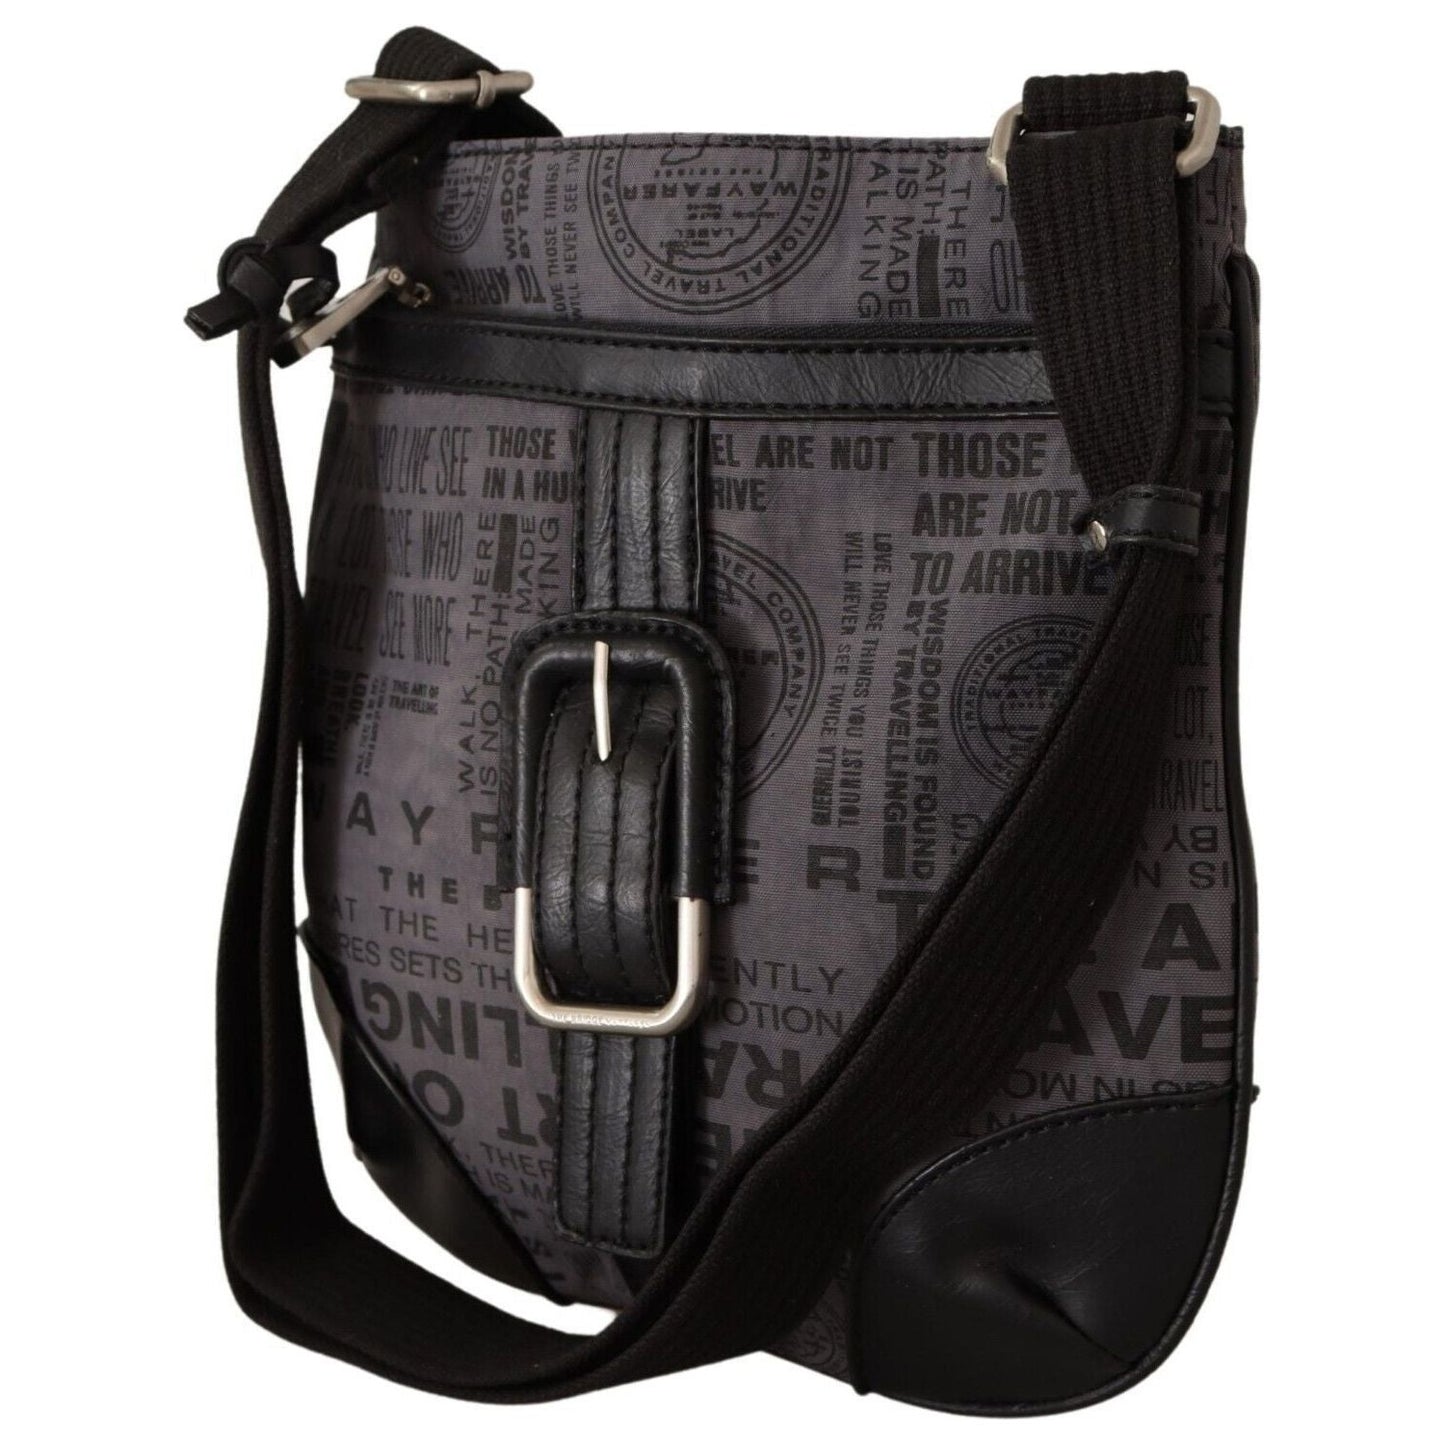 WAYFARER Chic Gray Fabric Crossbody Bag gray-printed-logo-shoulder-crossbody-purse-bag Crossbody Bag s-l1600-2-23-d7b23900-3e8.jpg